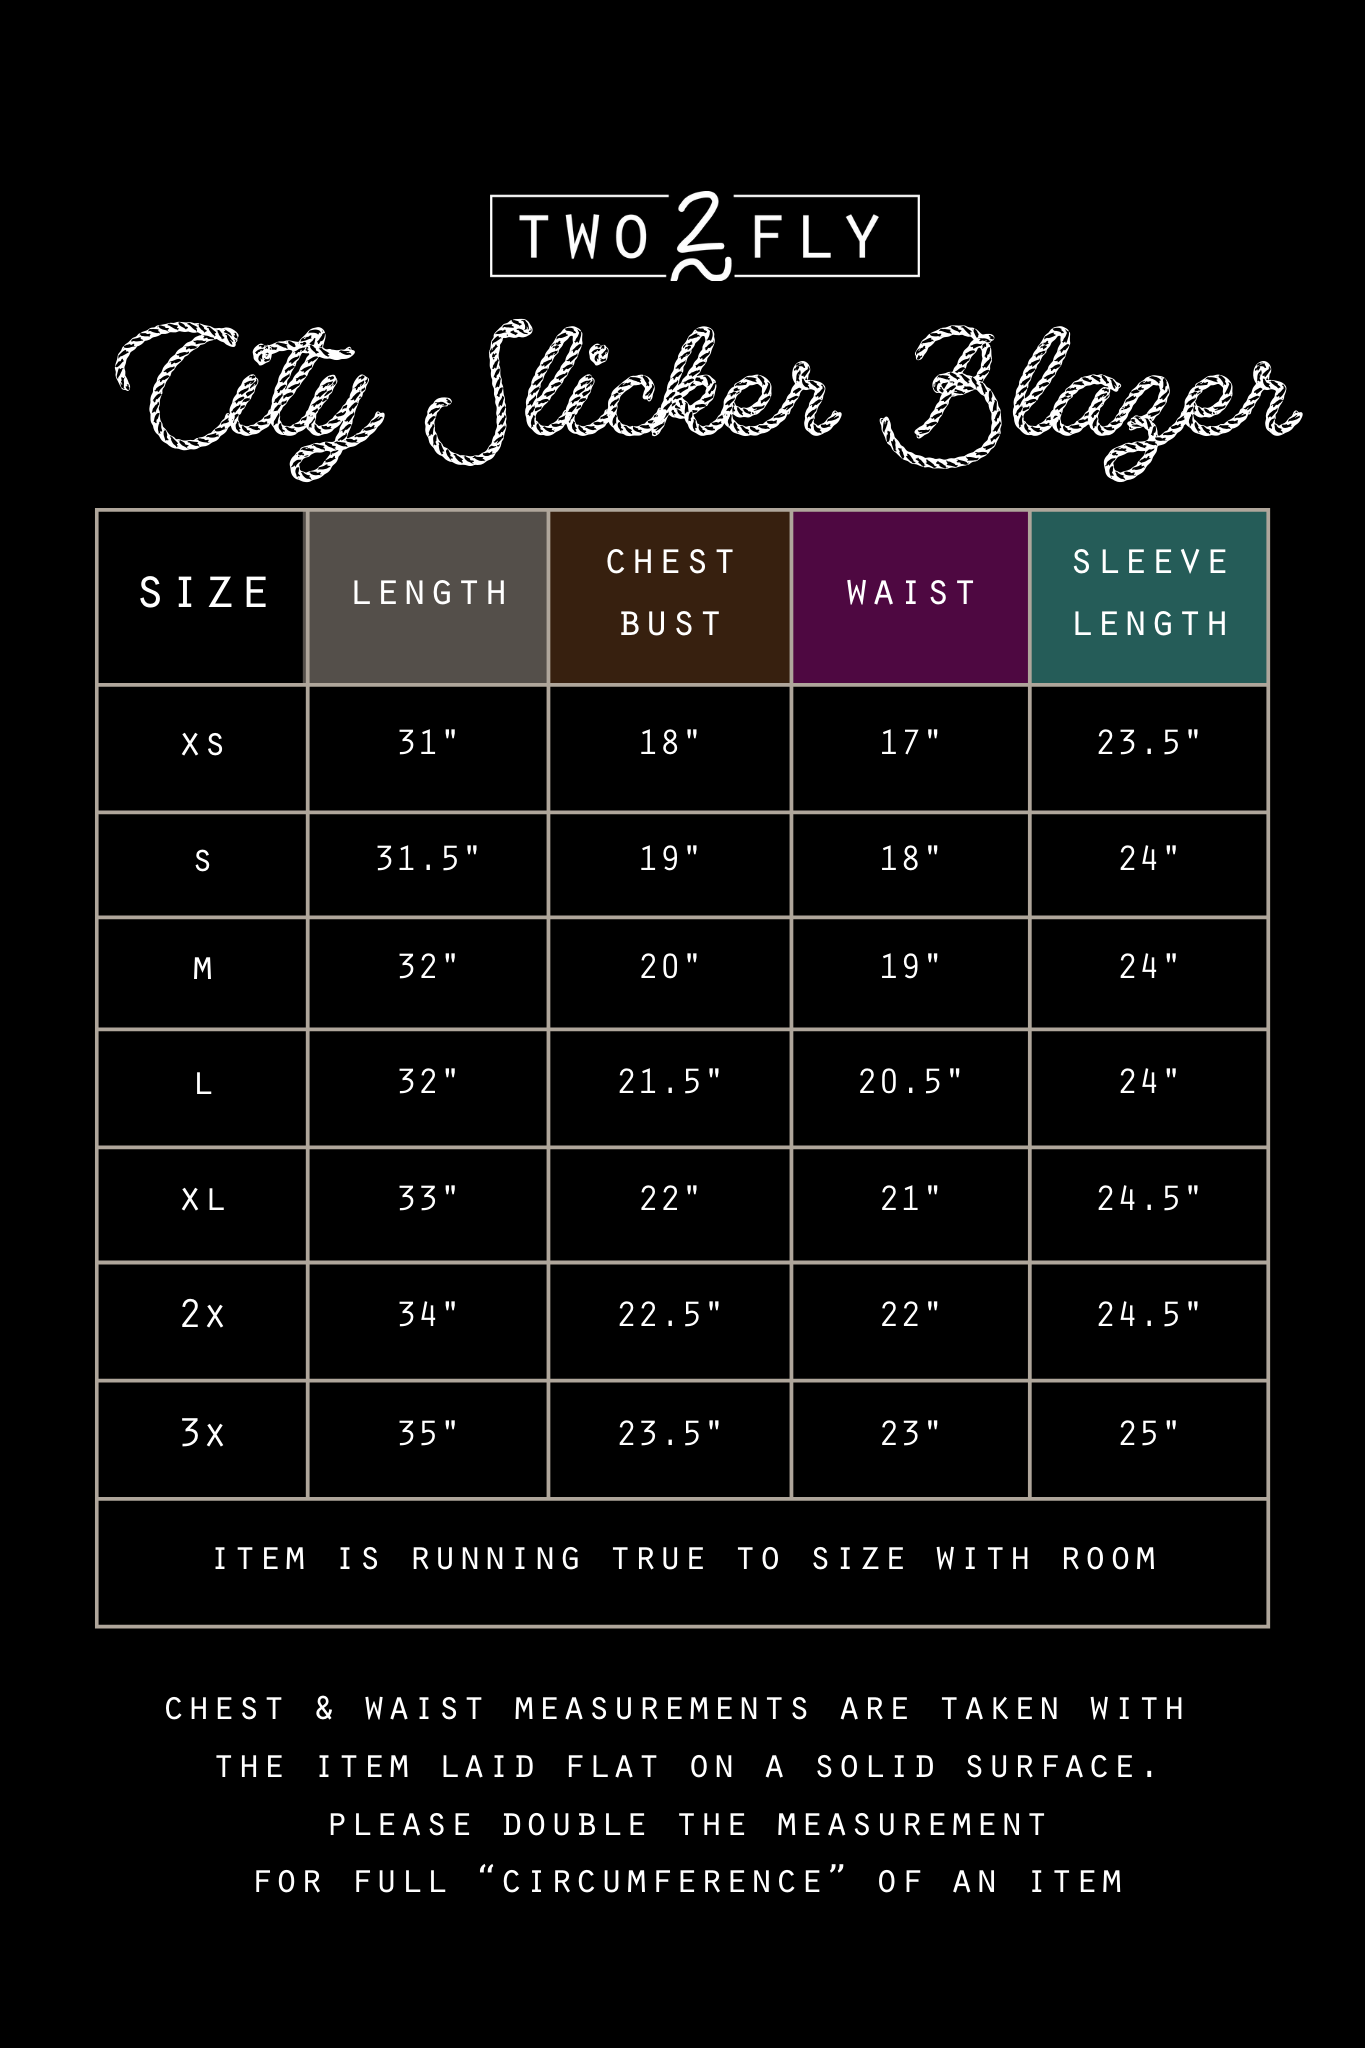 the City |Slicker| Blazer dress